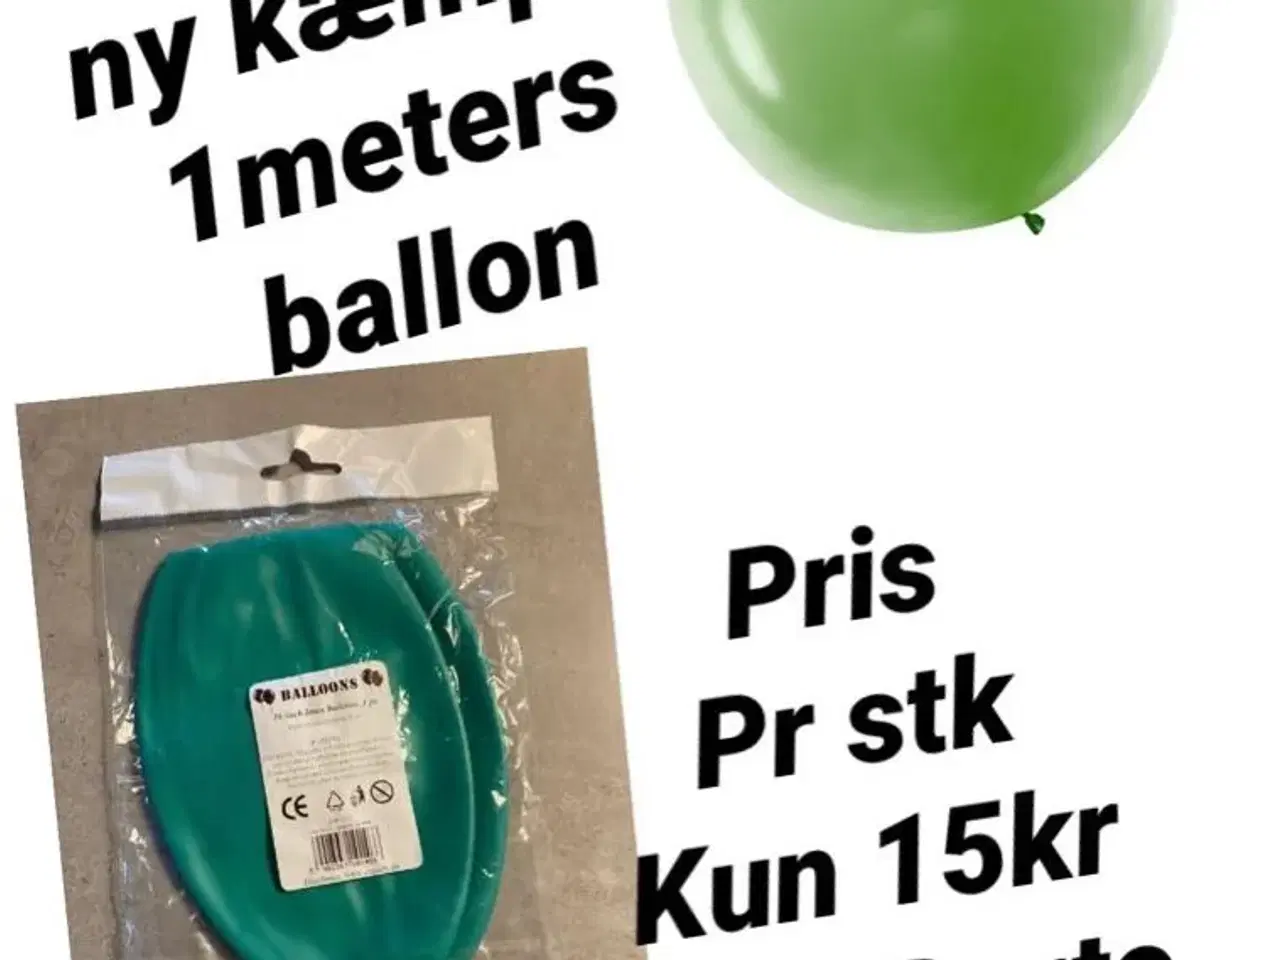 Billede 1 - 1 stk ny kæmpe 1meters grøn ballon